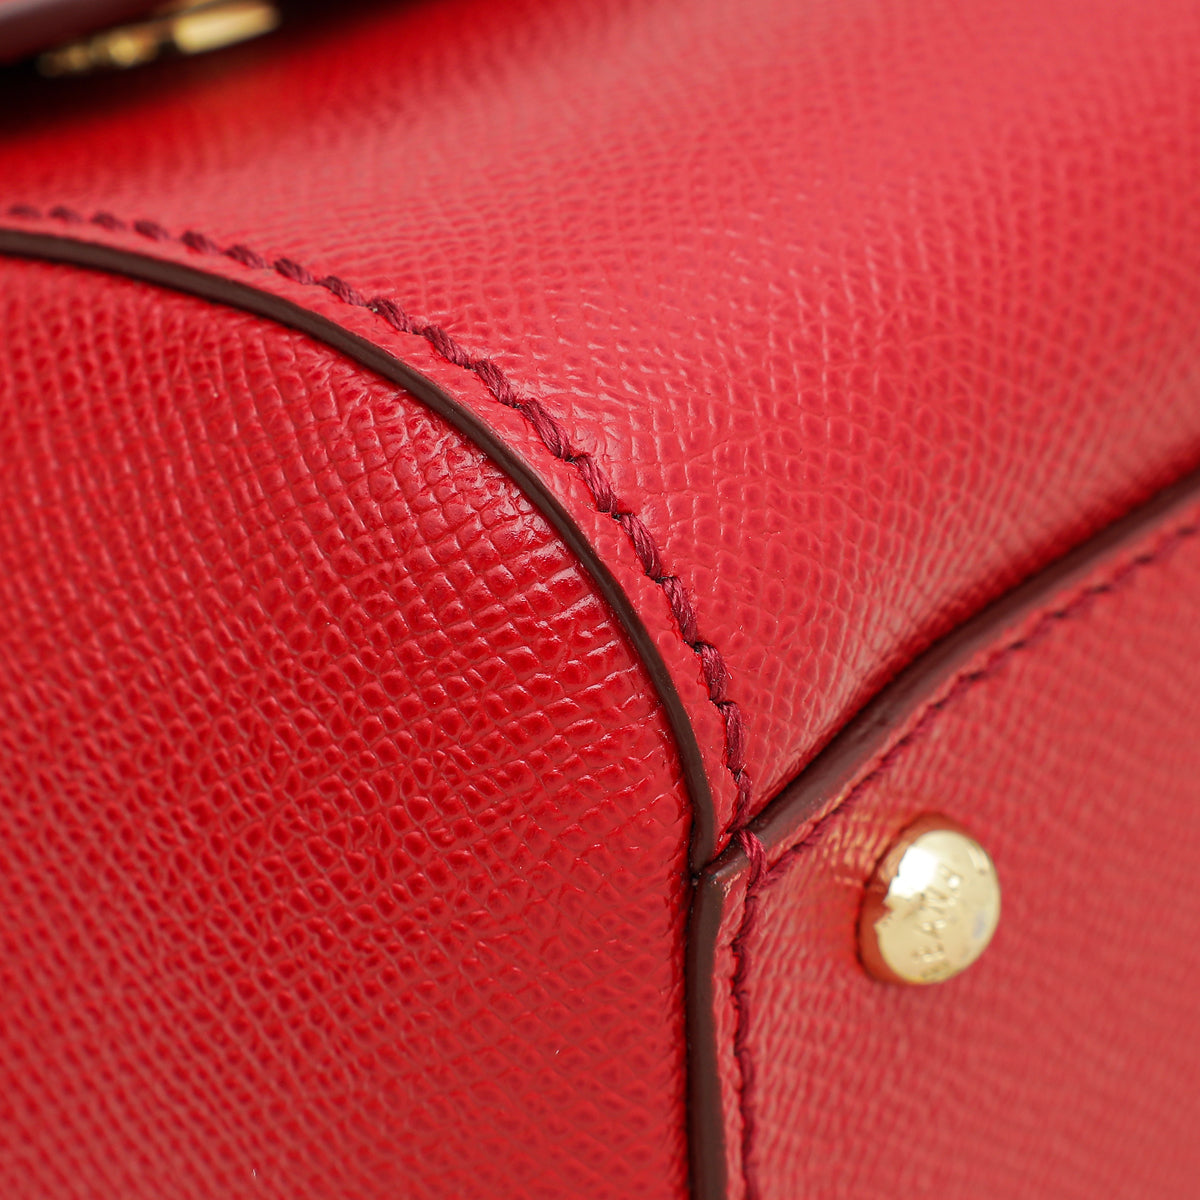 Dolce & Gabbana Red Sicily Dauphine Medium Bag